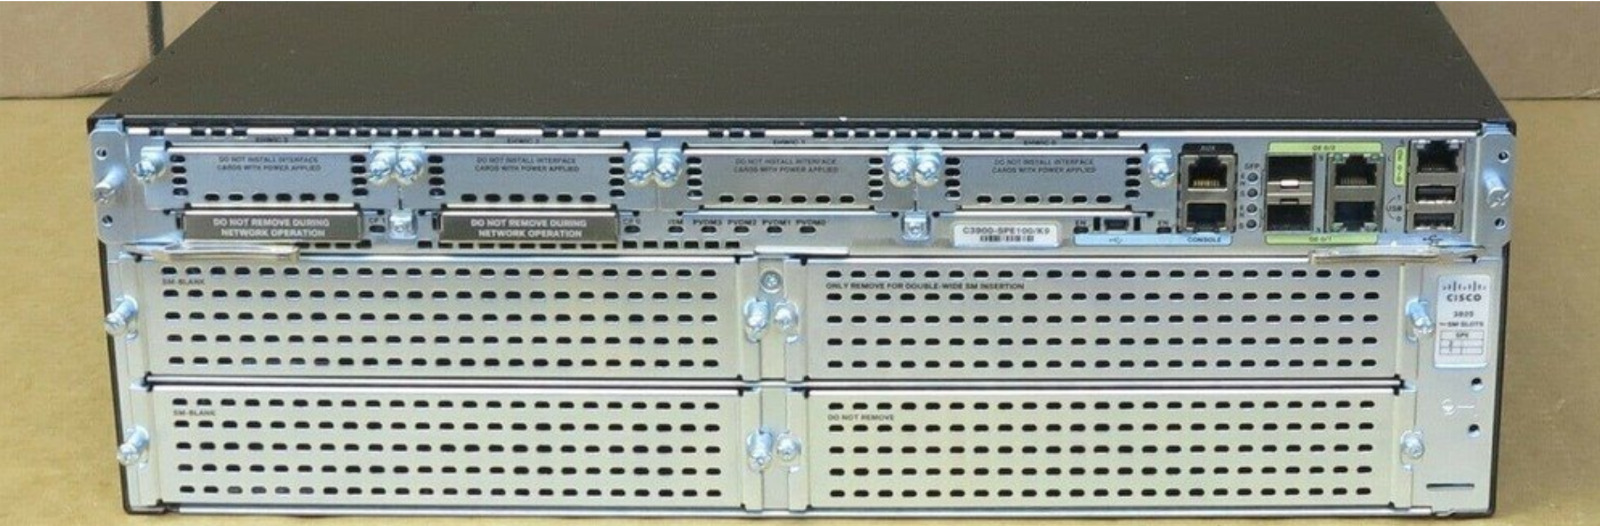 Cisco 3925-HSEC+/K9 w/ ISM-VPN-39 Bun 1GB CISCO3925-HSEC+/K9